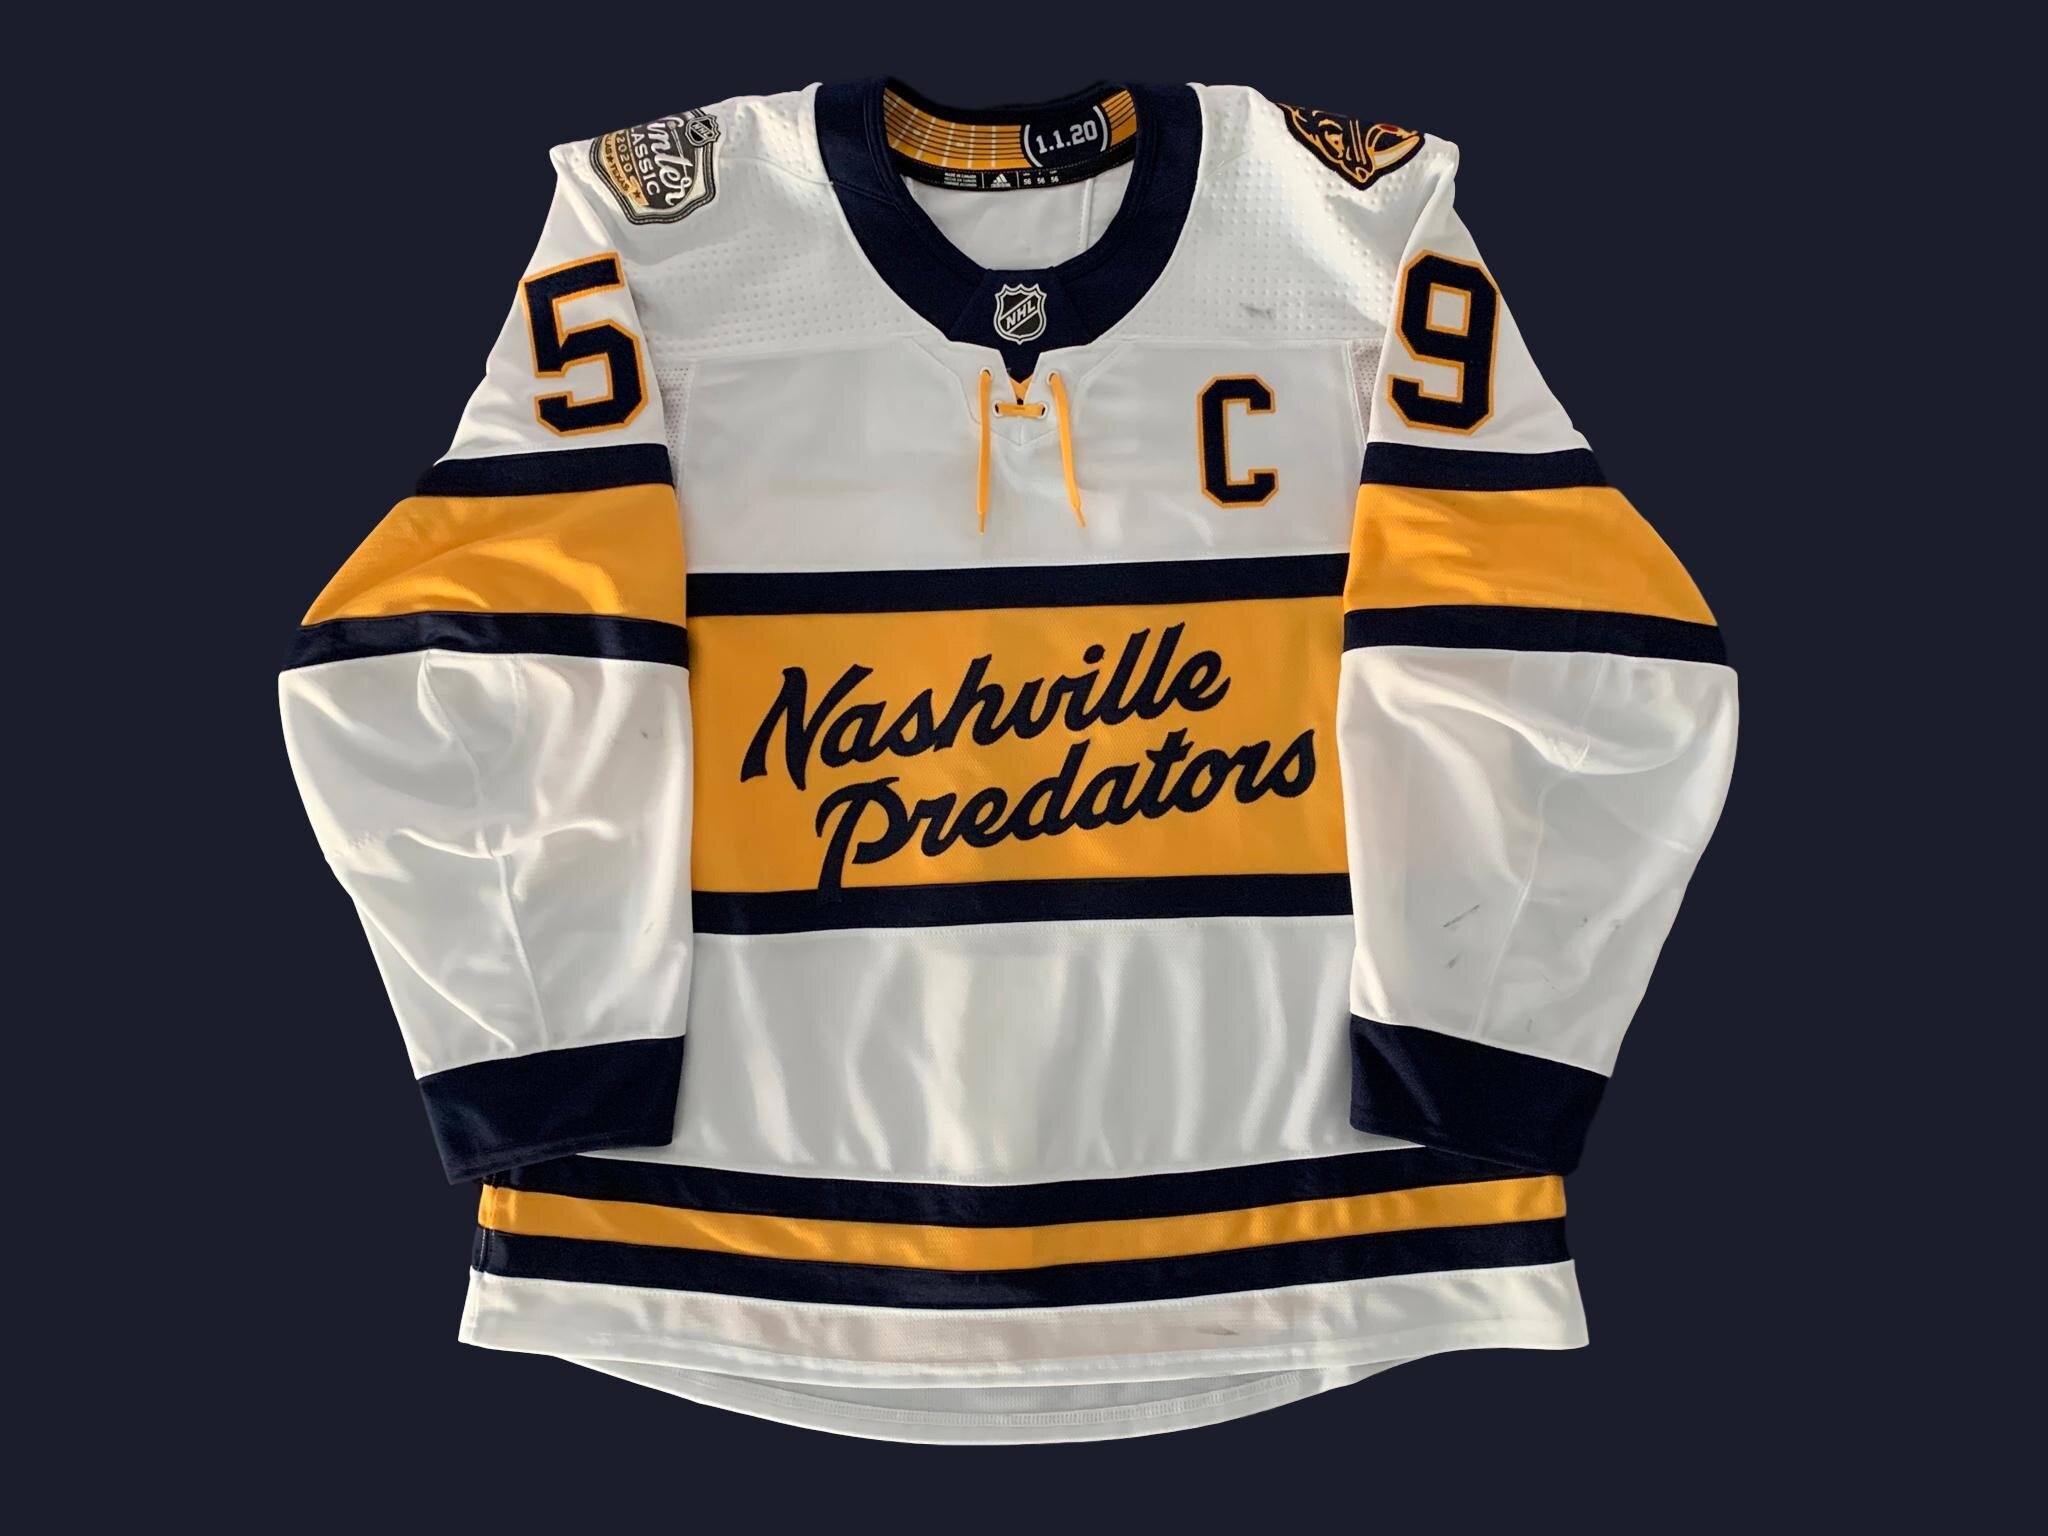 Nashville Predators: Sweaters or Jerseys?